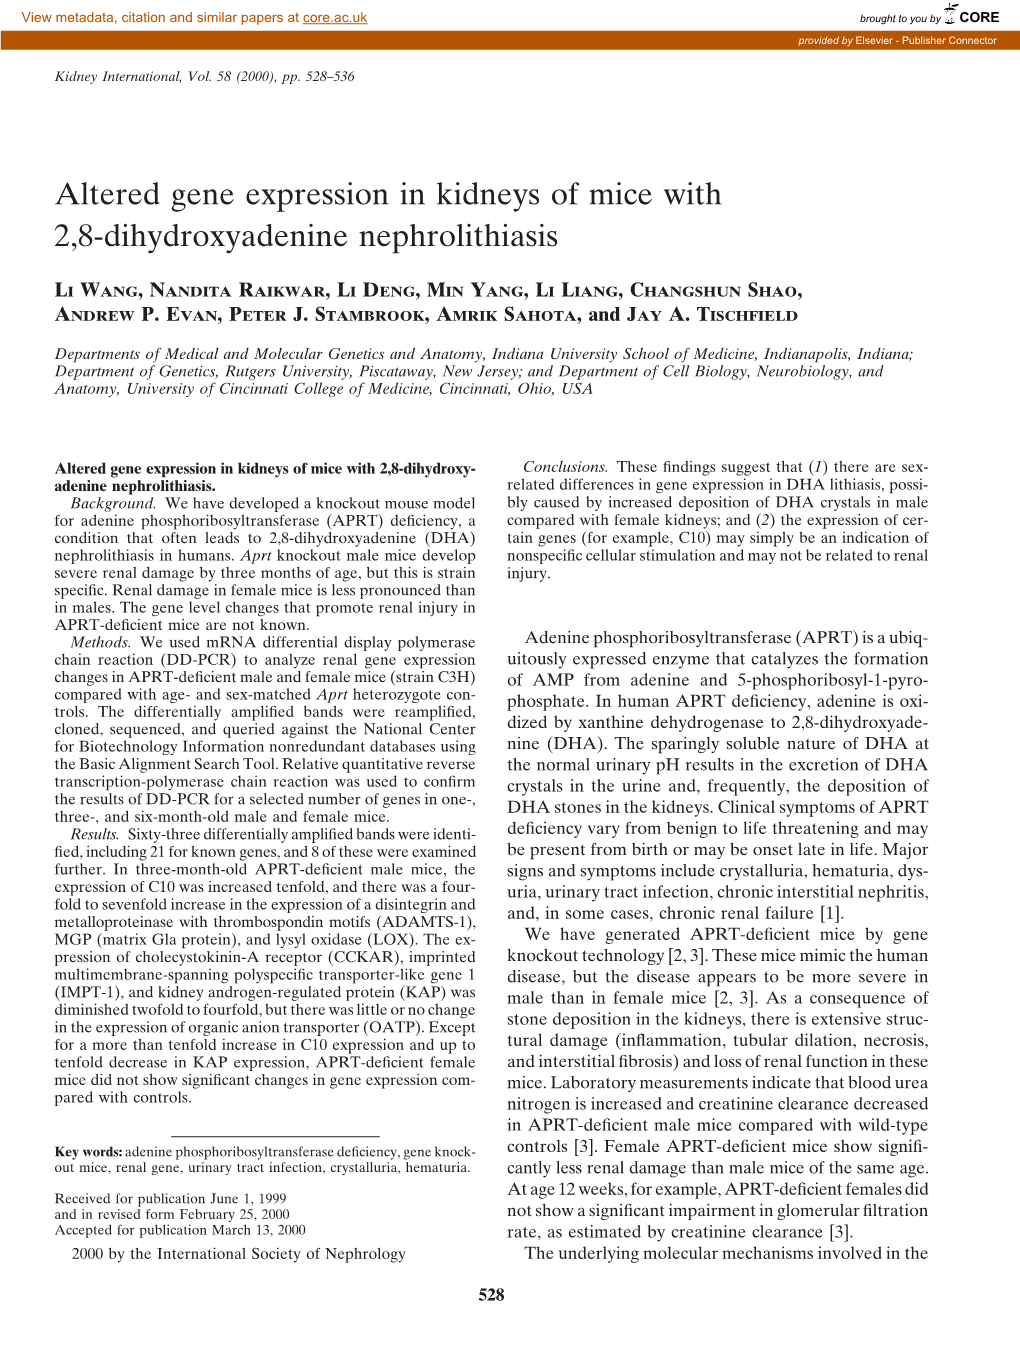 Altered Gene Expression in Kidneys of Mice with 2,8-Dihydroxyadenine Nephrolithiasis